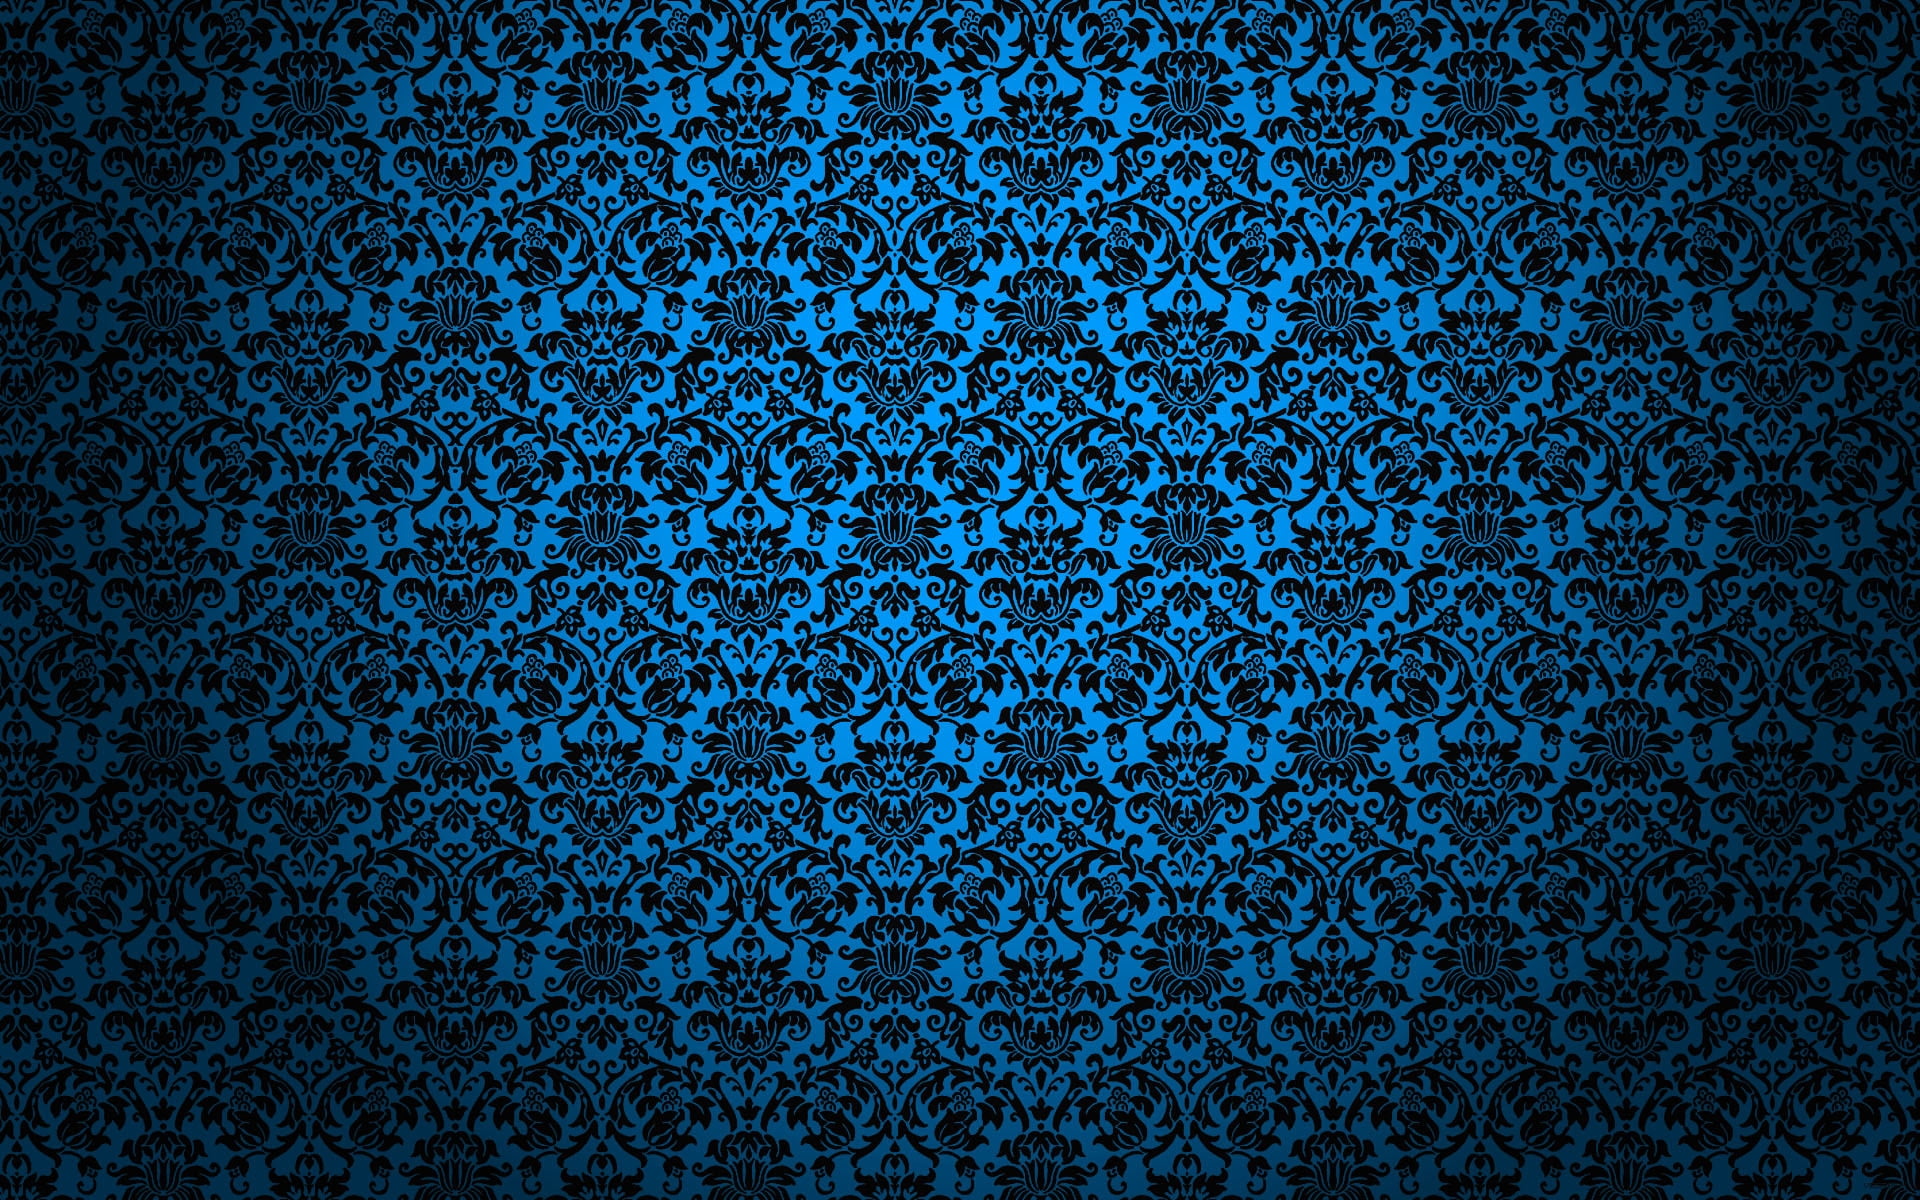 blue and black damask surface